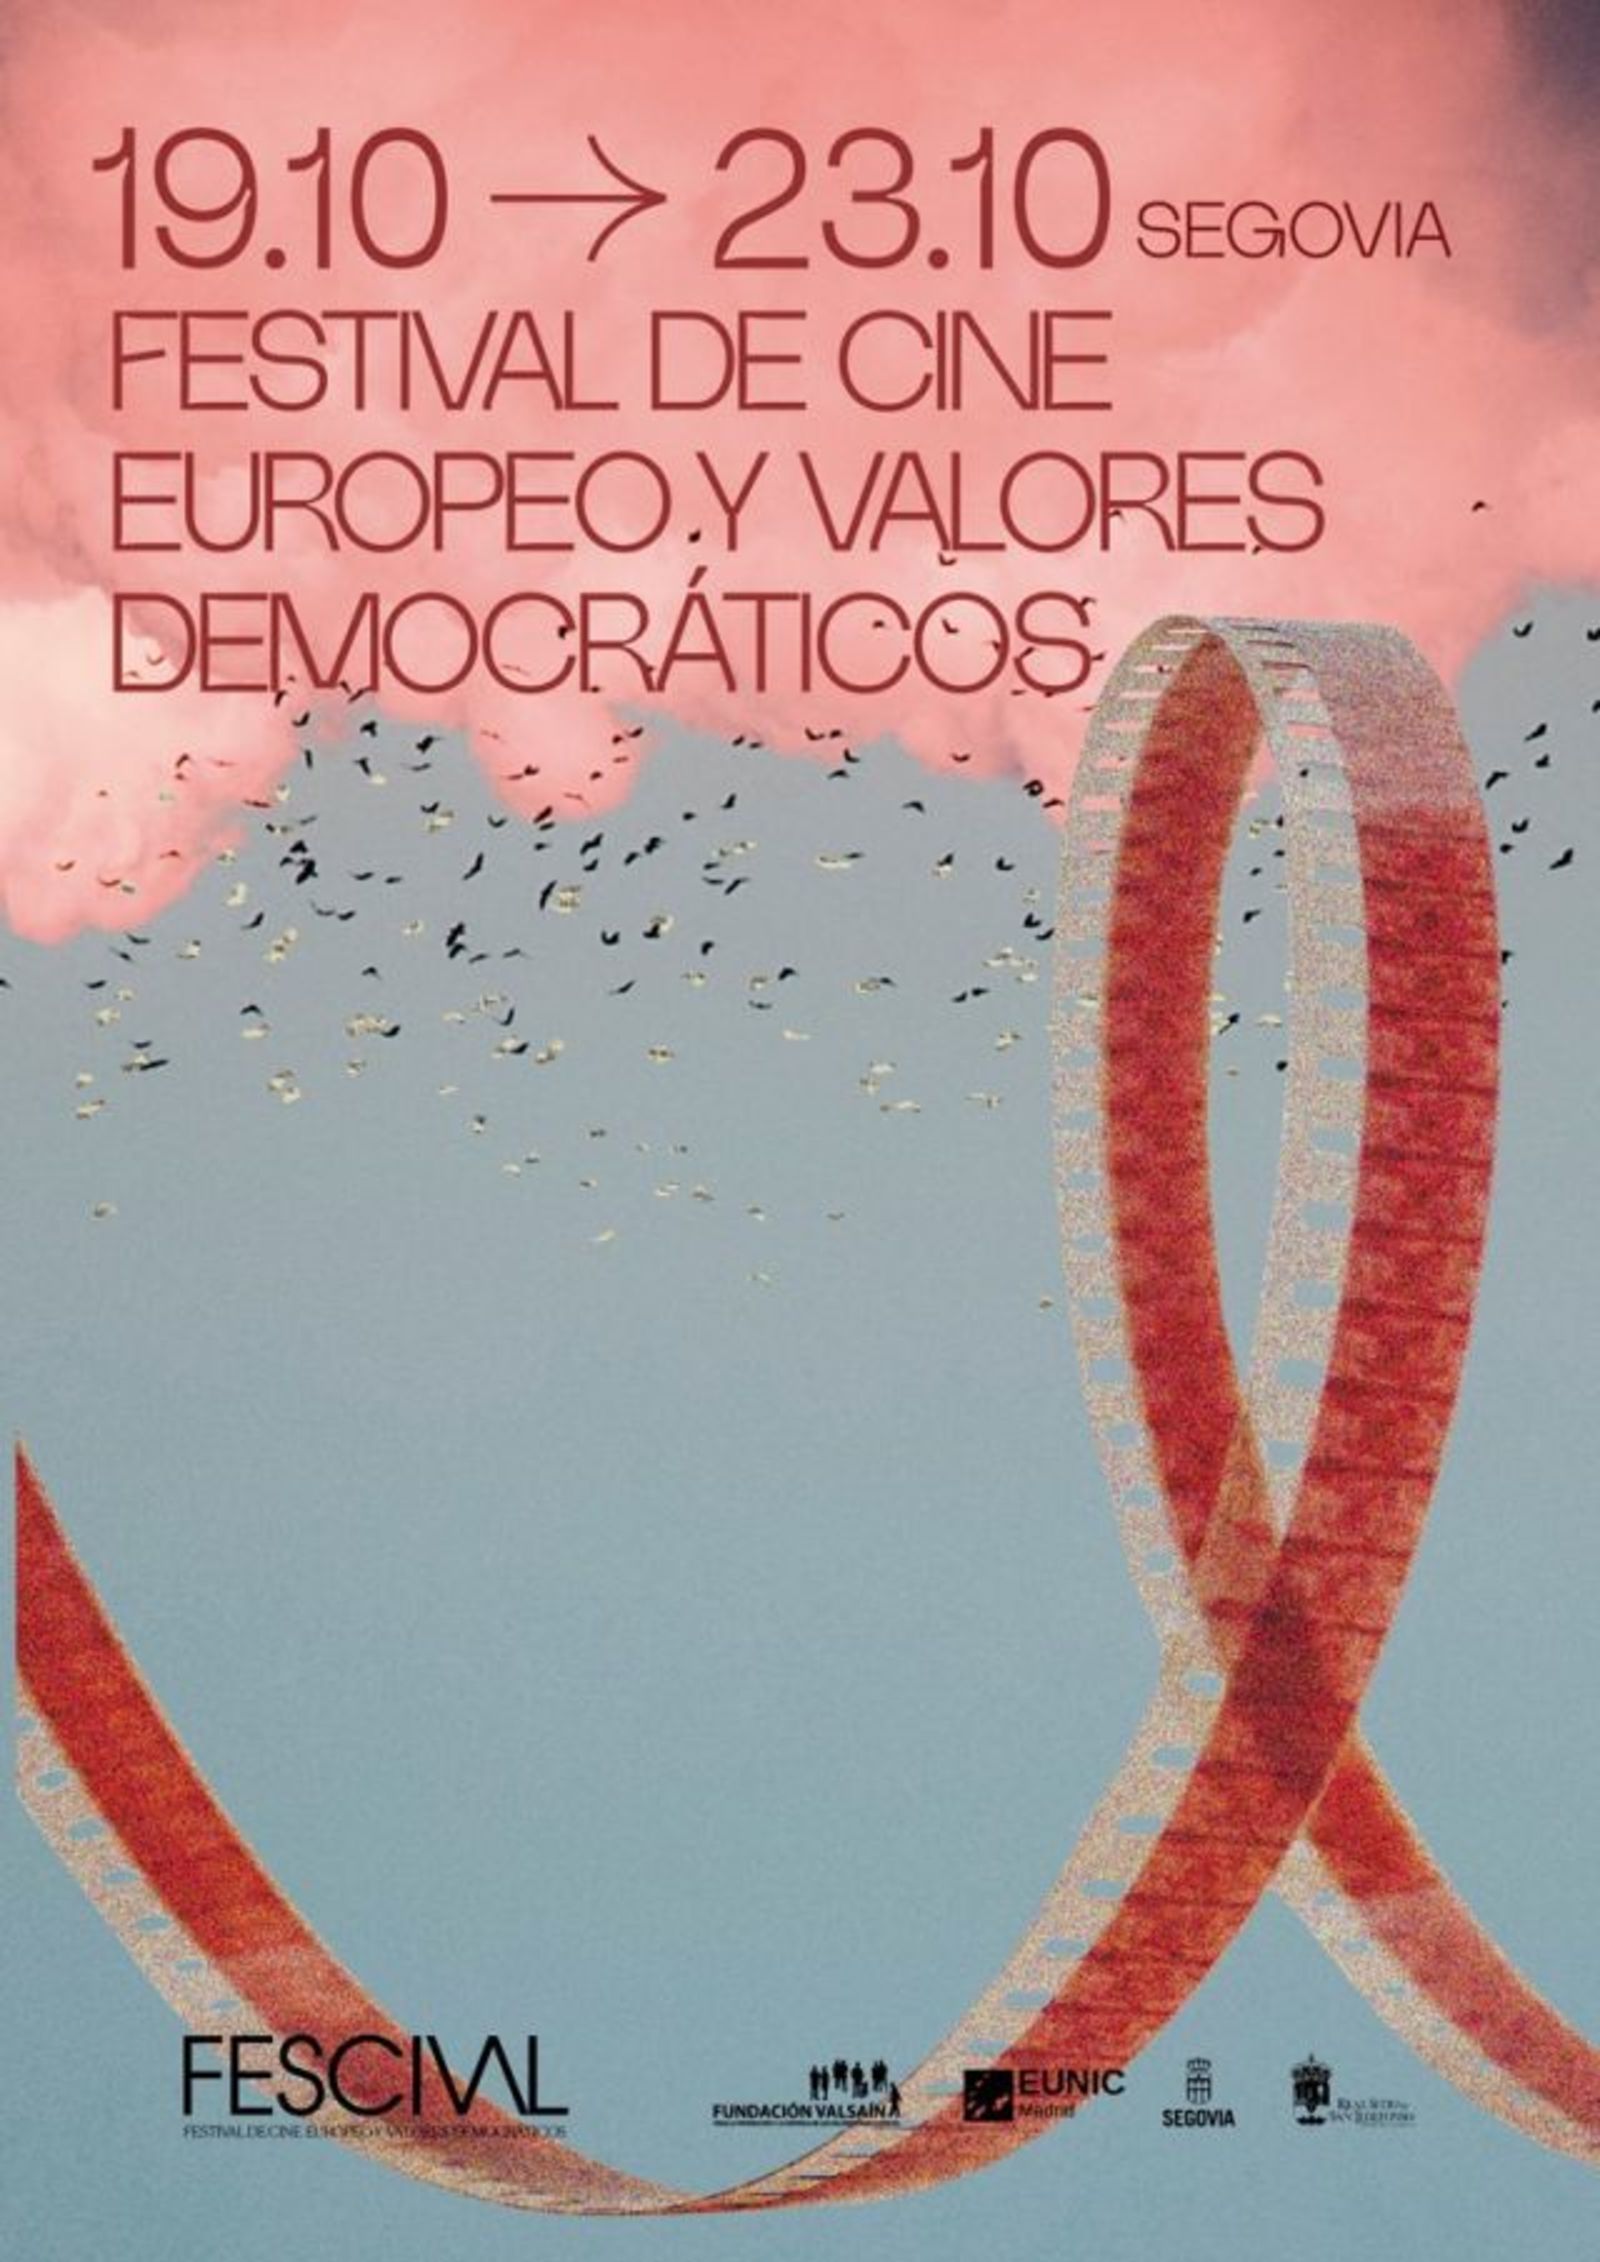 Bulgarian films in the first edition of the Festival of European Cinema and Democratic Values - FESCIVAL, Segovia